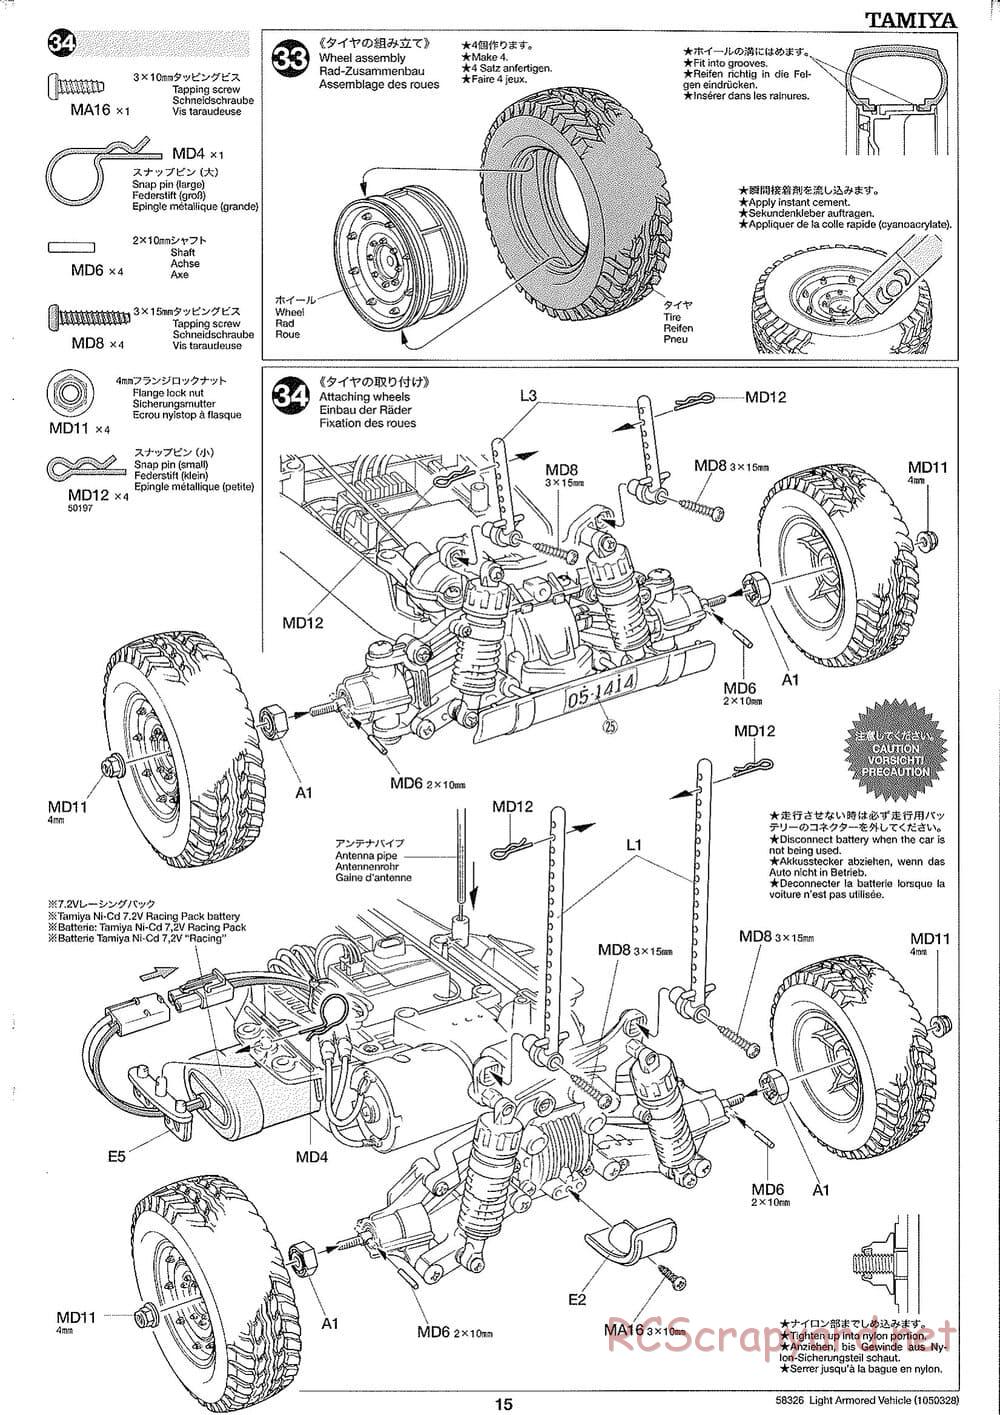 Tamiya - JGSDF Light Armored Vehicle - TA-01 Chassis - Manual - Page 15